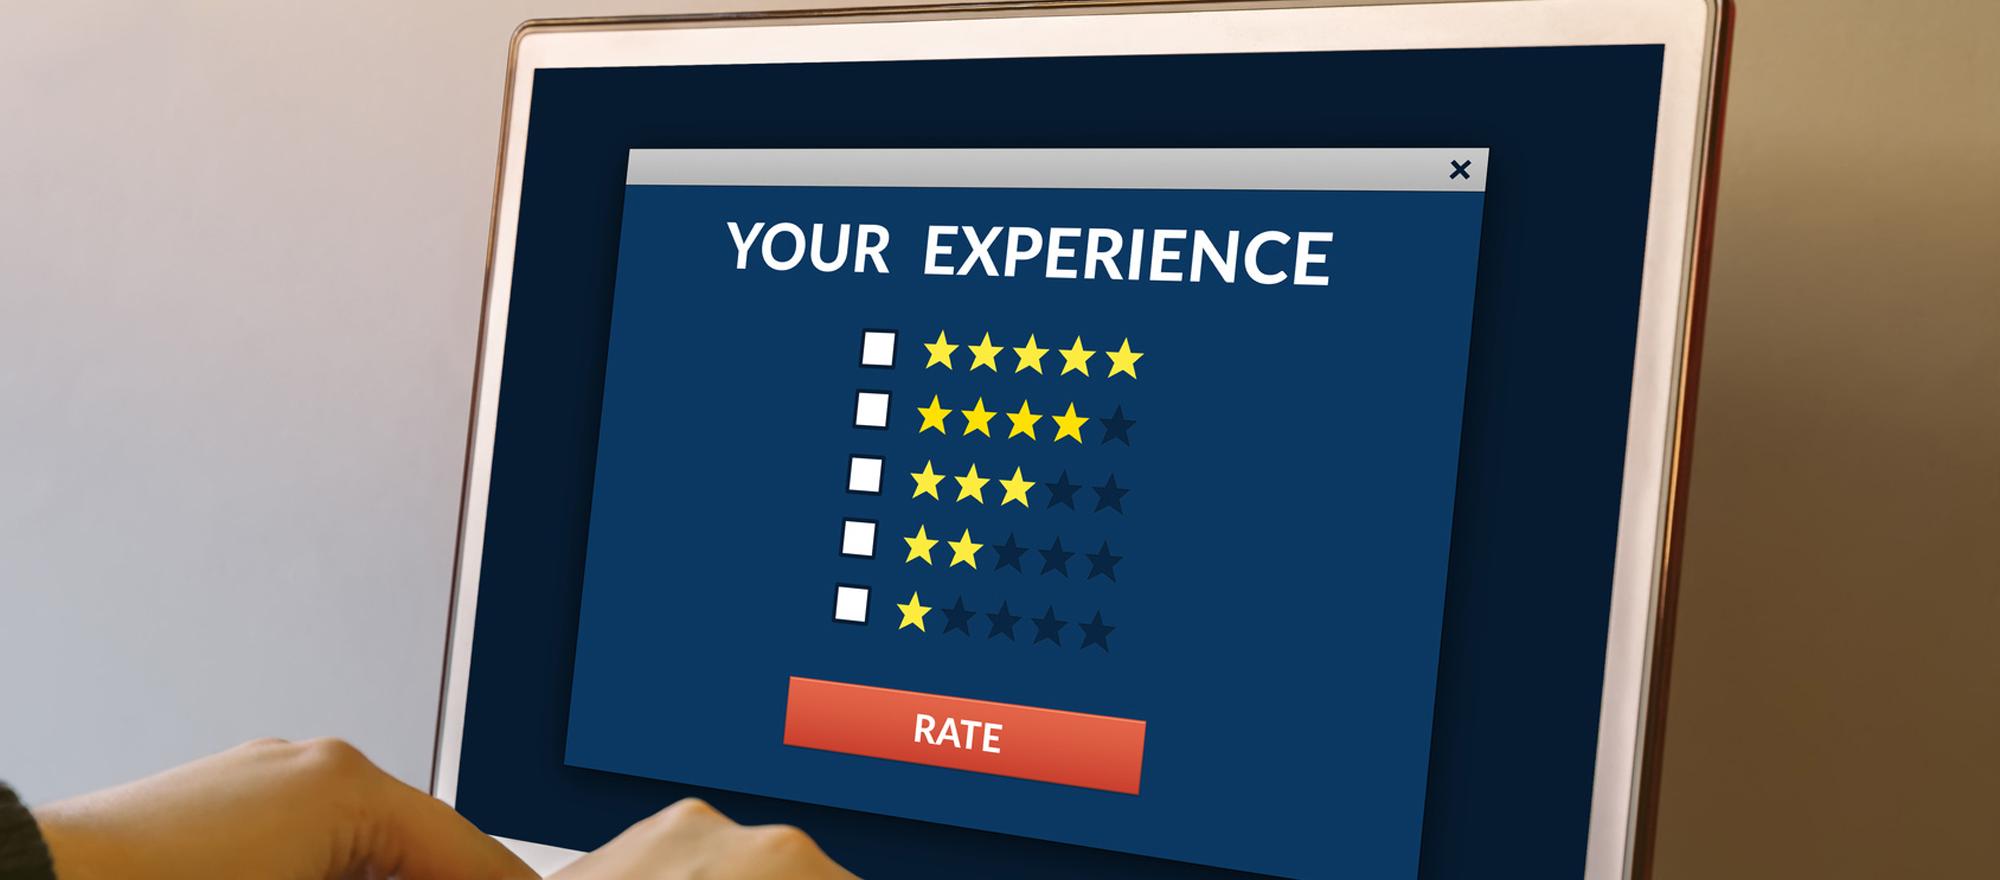 Digital customer expereince feedback form.